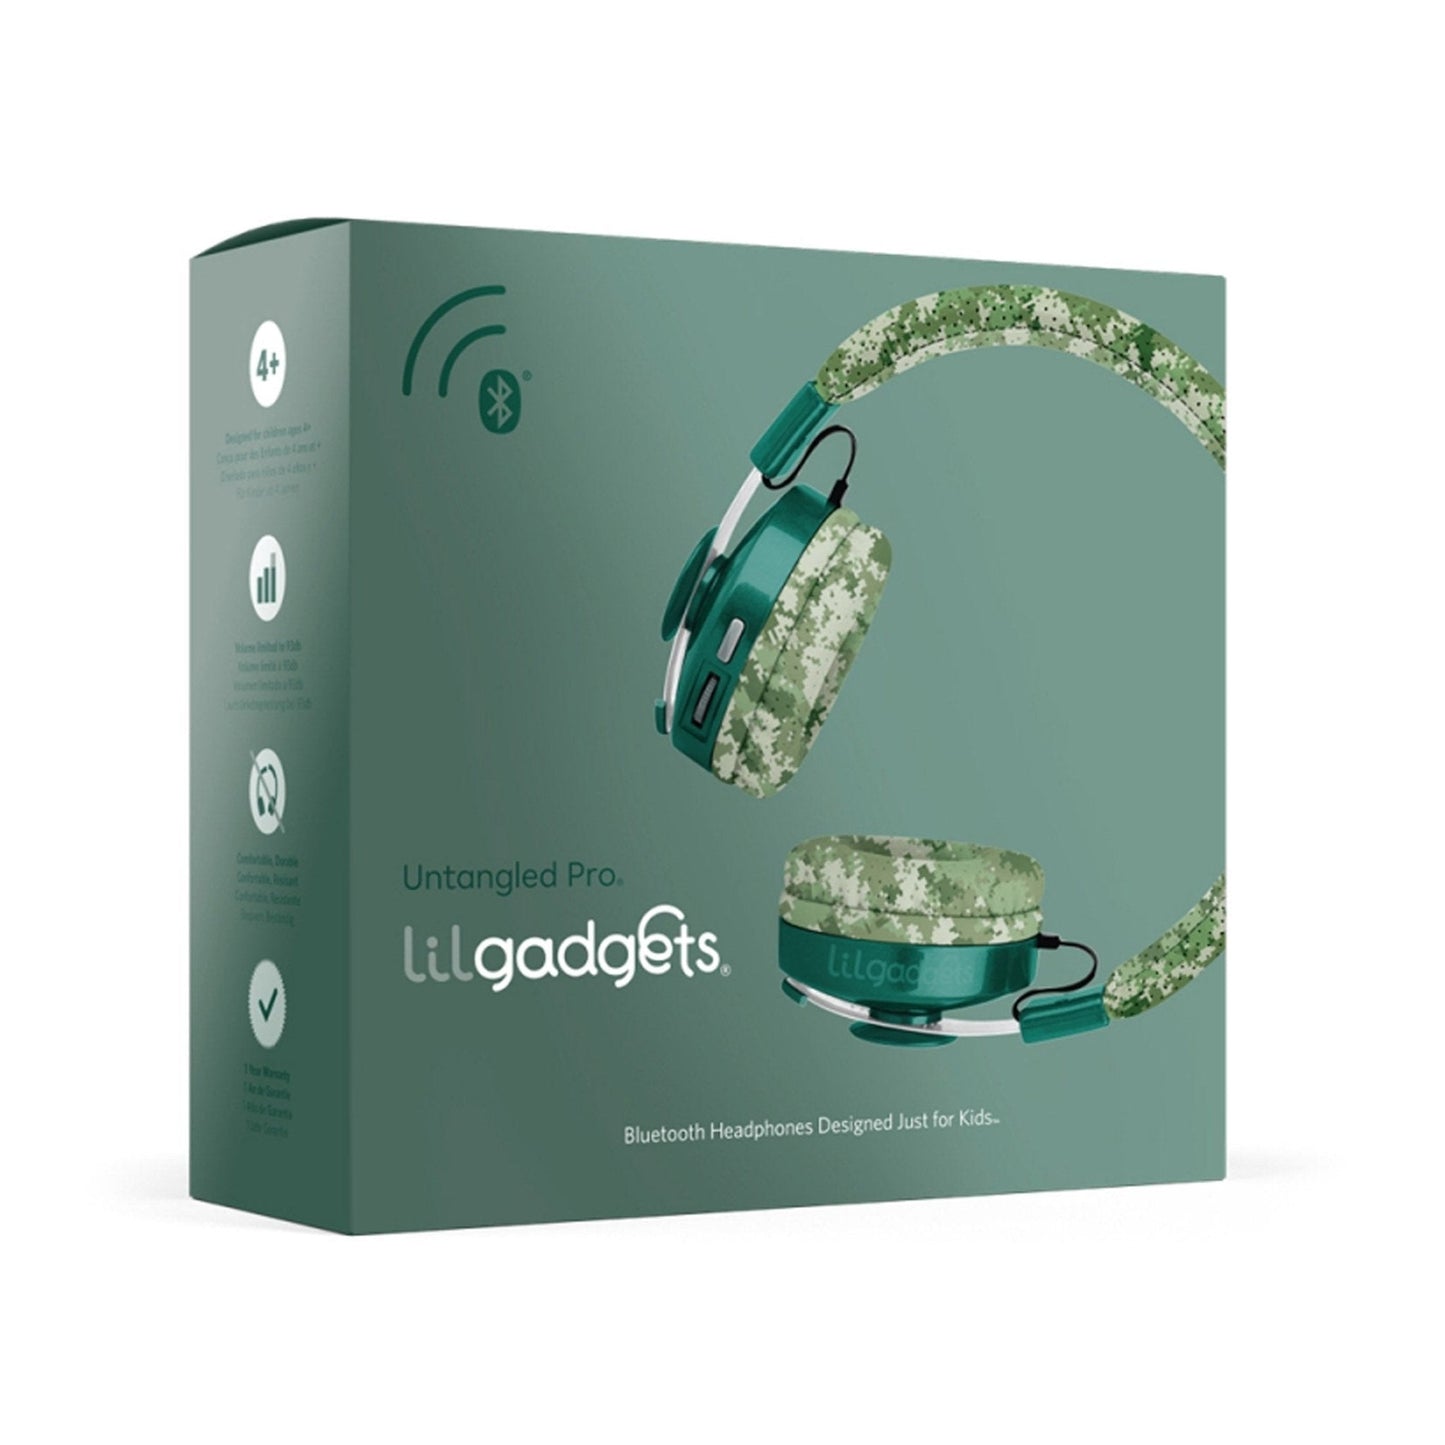 LilGadgets Untangled Pro Premium Children's Wireless Headphones - Green Digital Camo - Little Kids Business